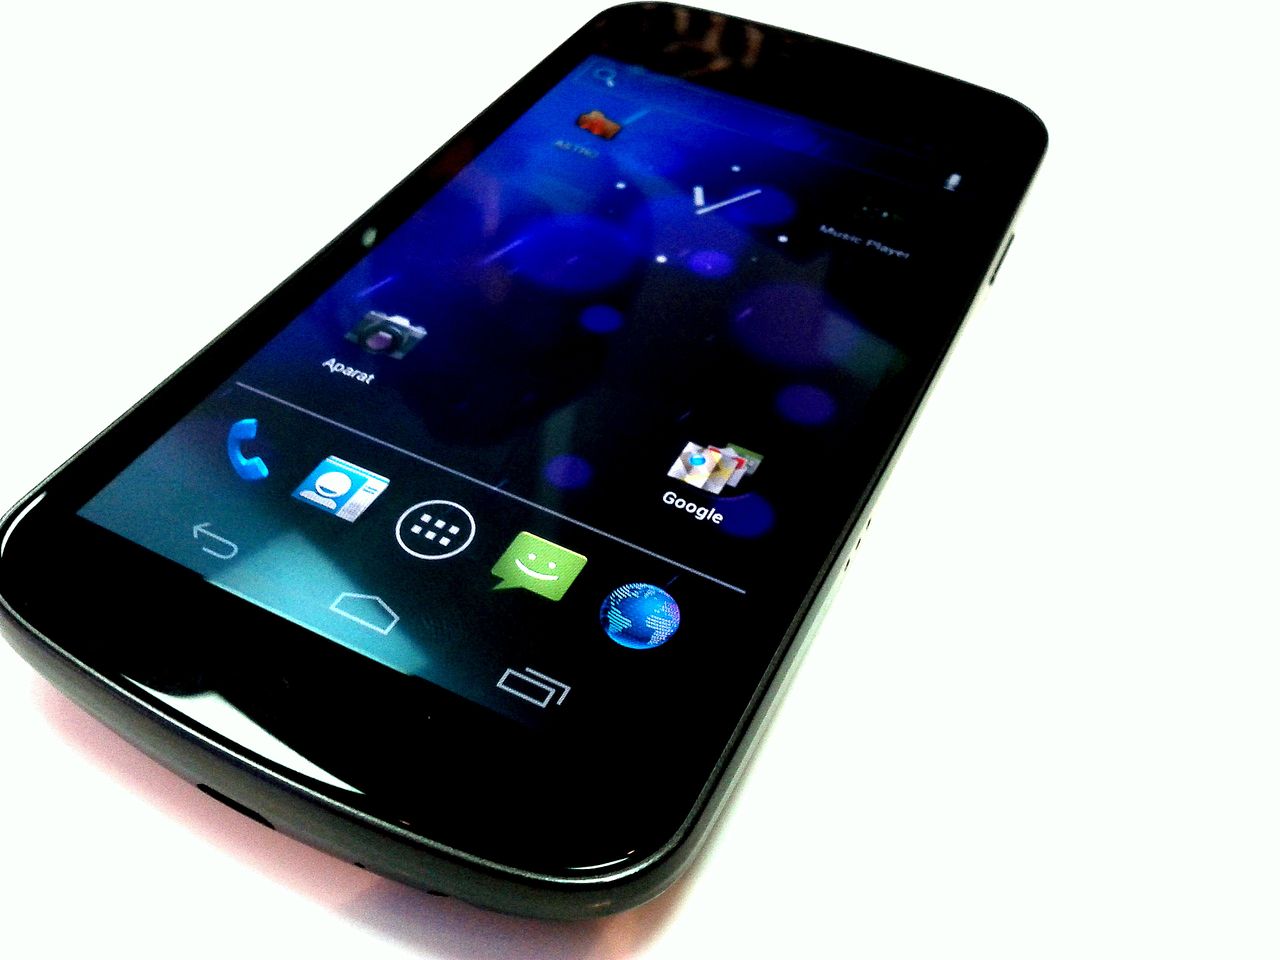 Samsung Galaxy Nexus (fot. źródła własne).